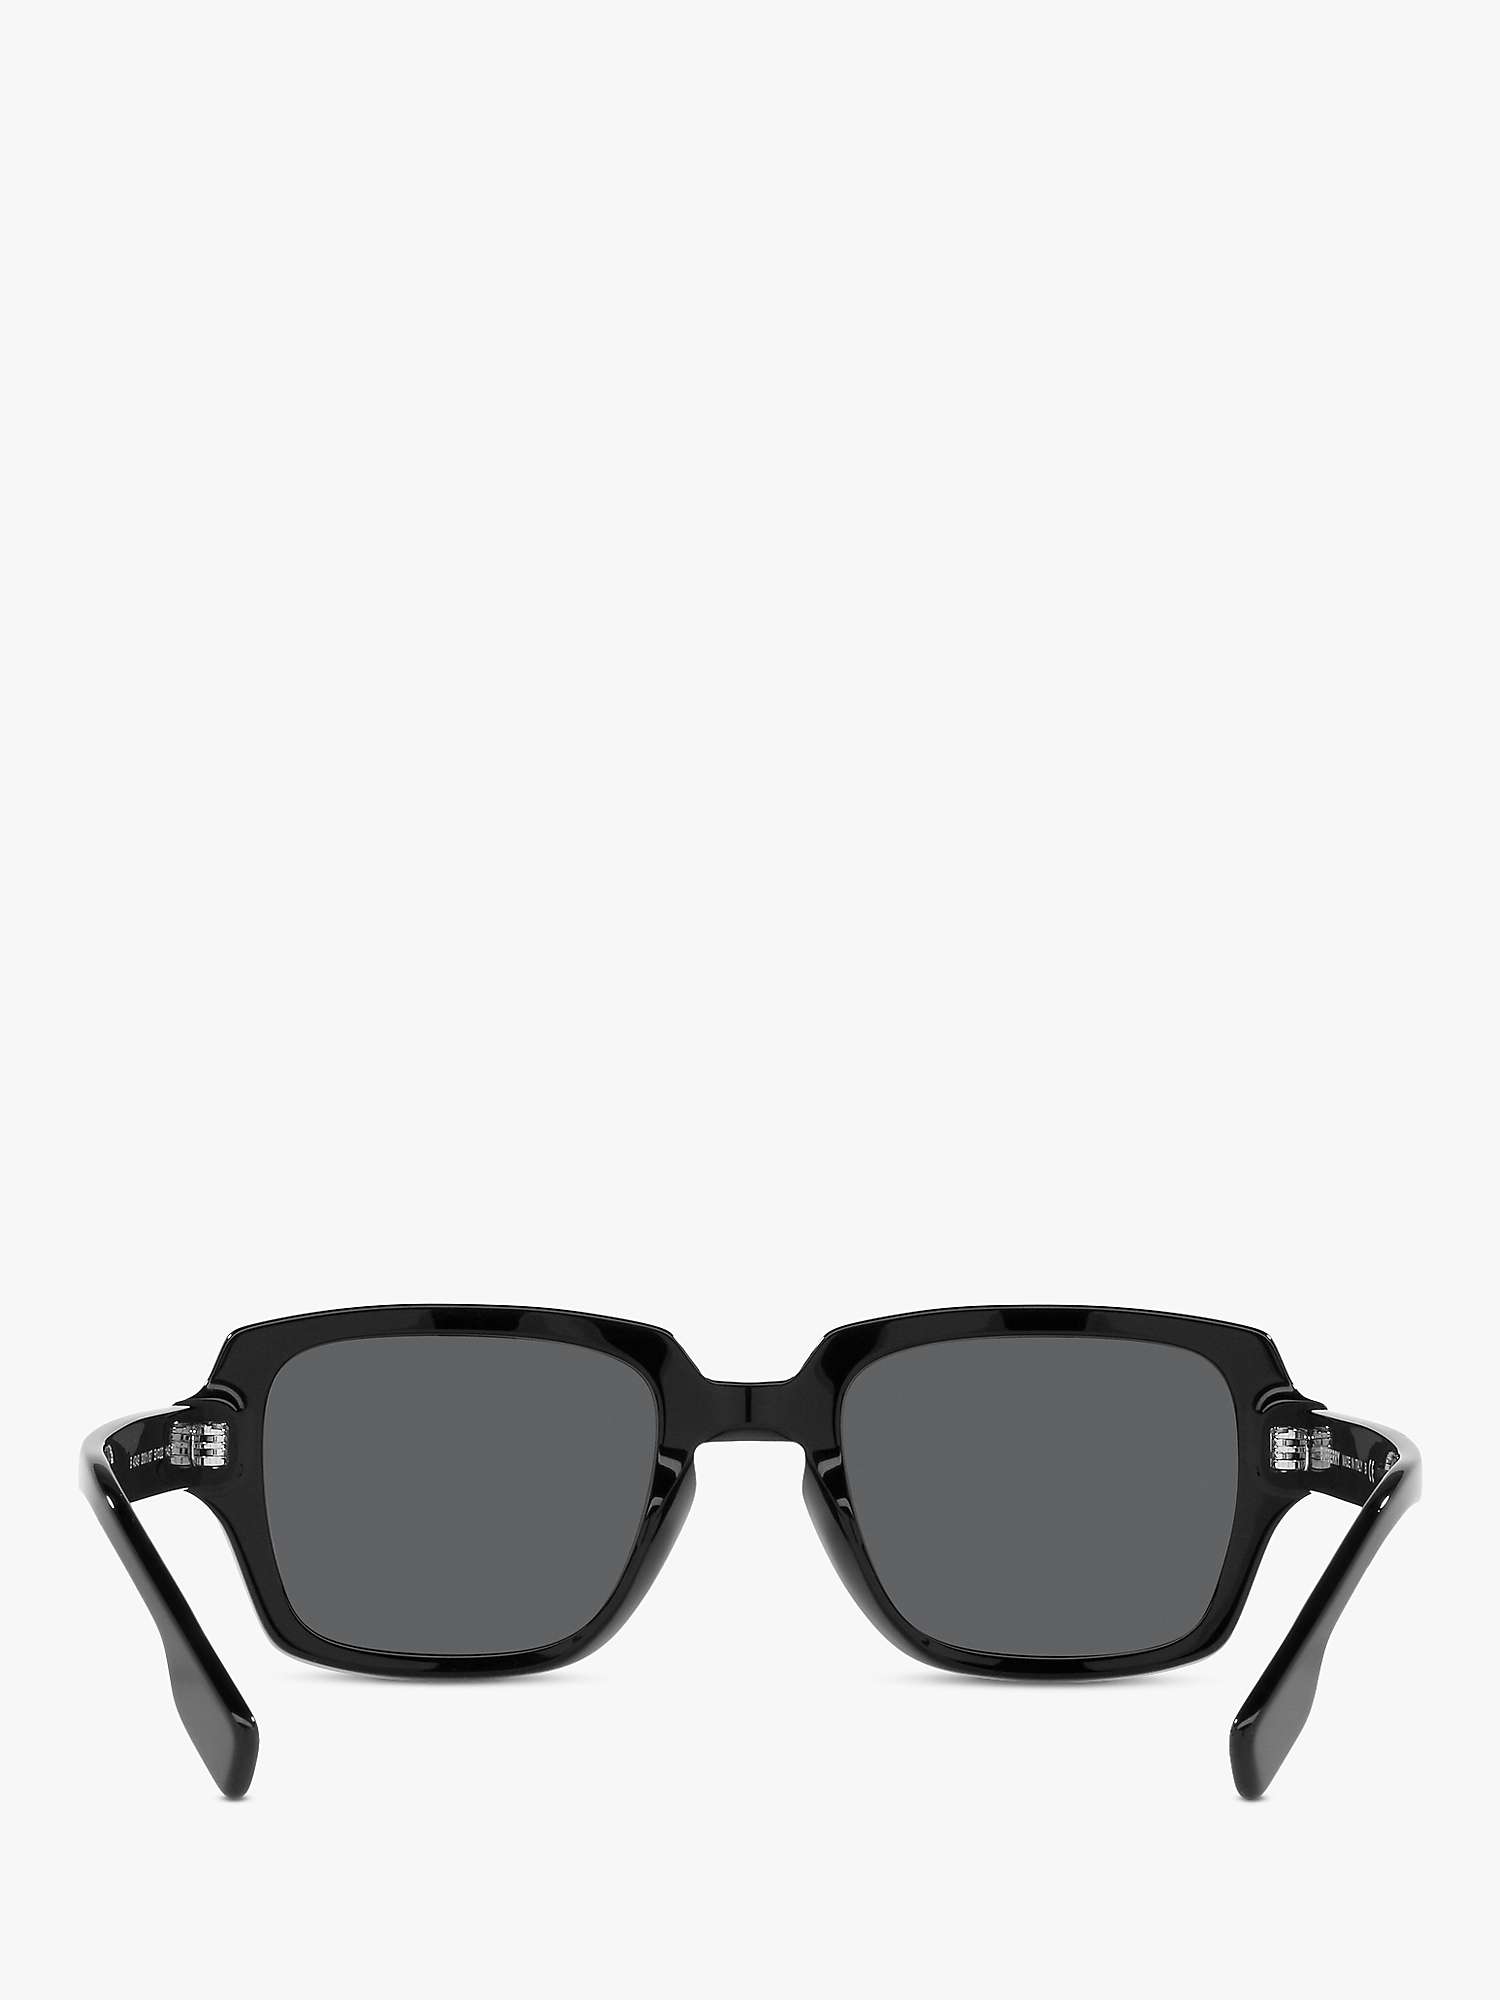 Buy Burberry BE4349 Men's Rectangular Sunglasses Online at johnlewis.com